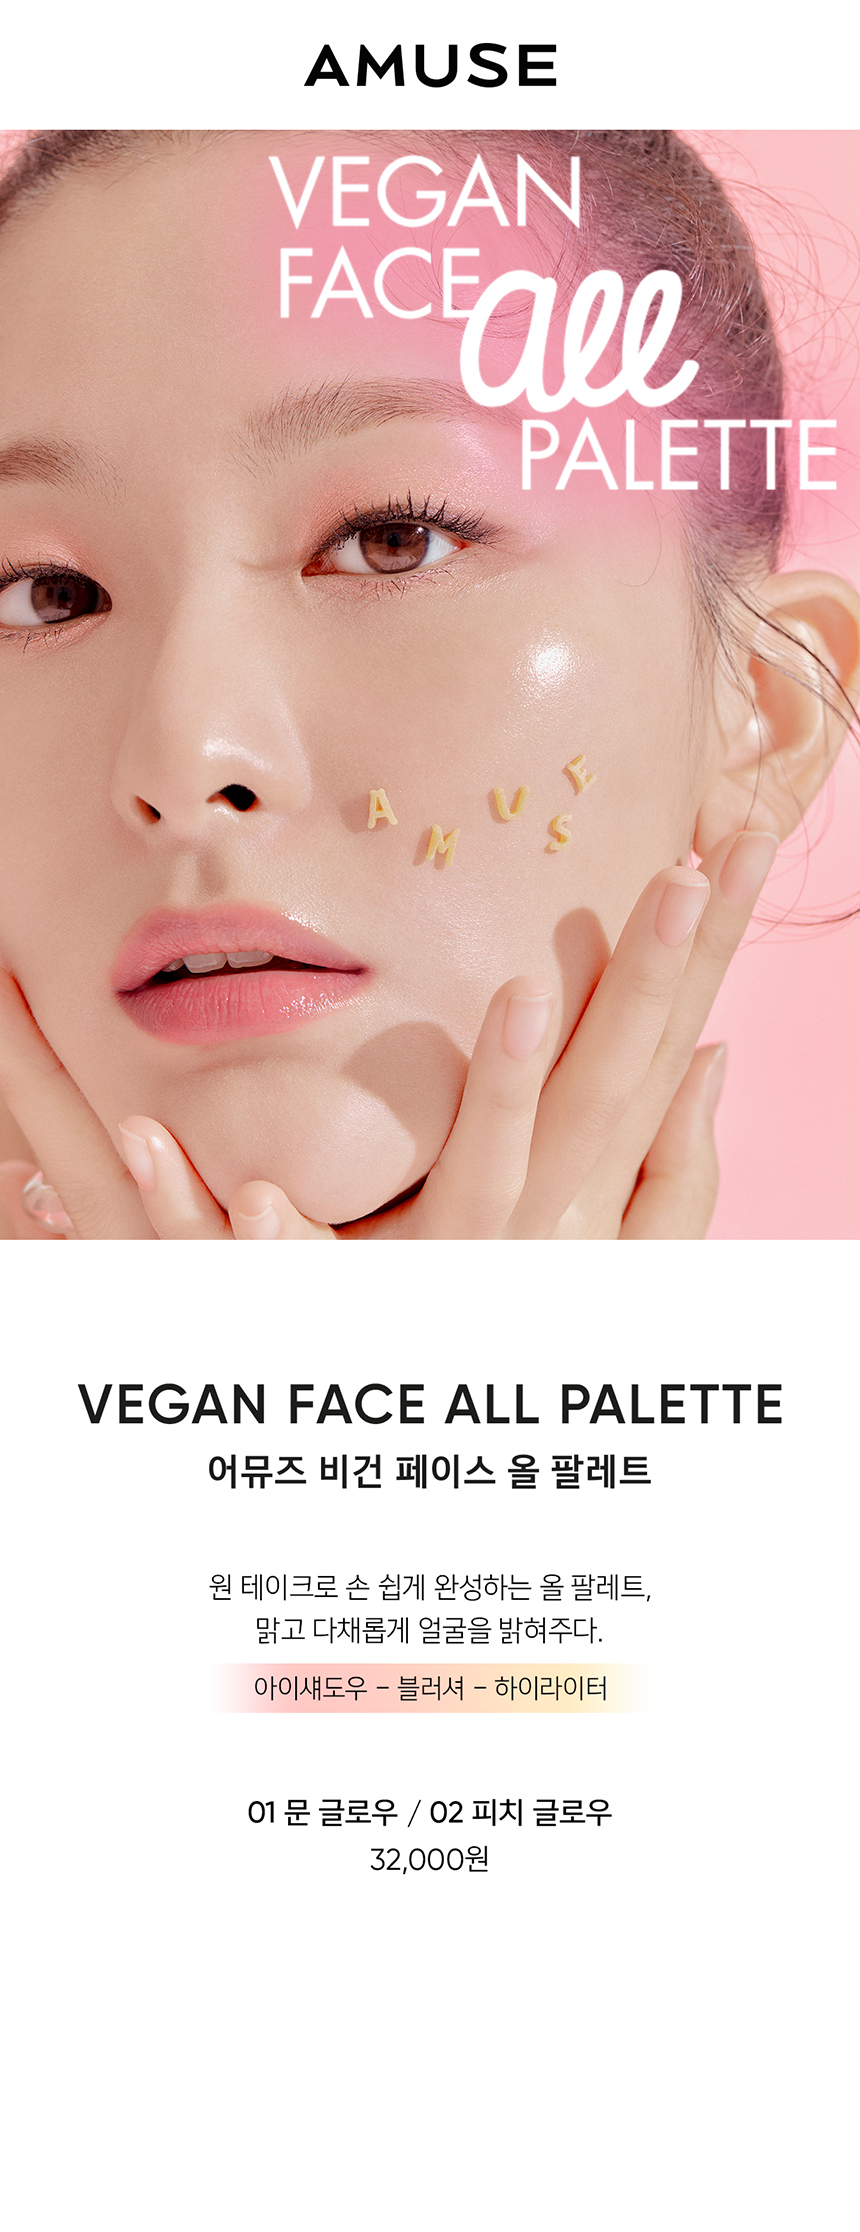 AMUSE Vegan Face All Palette